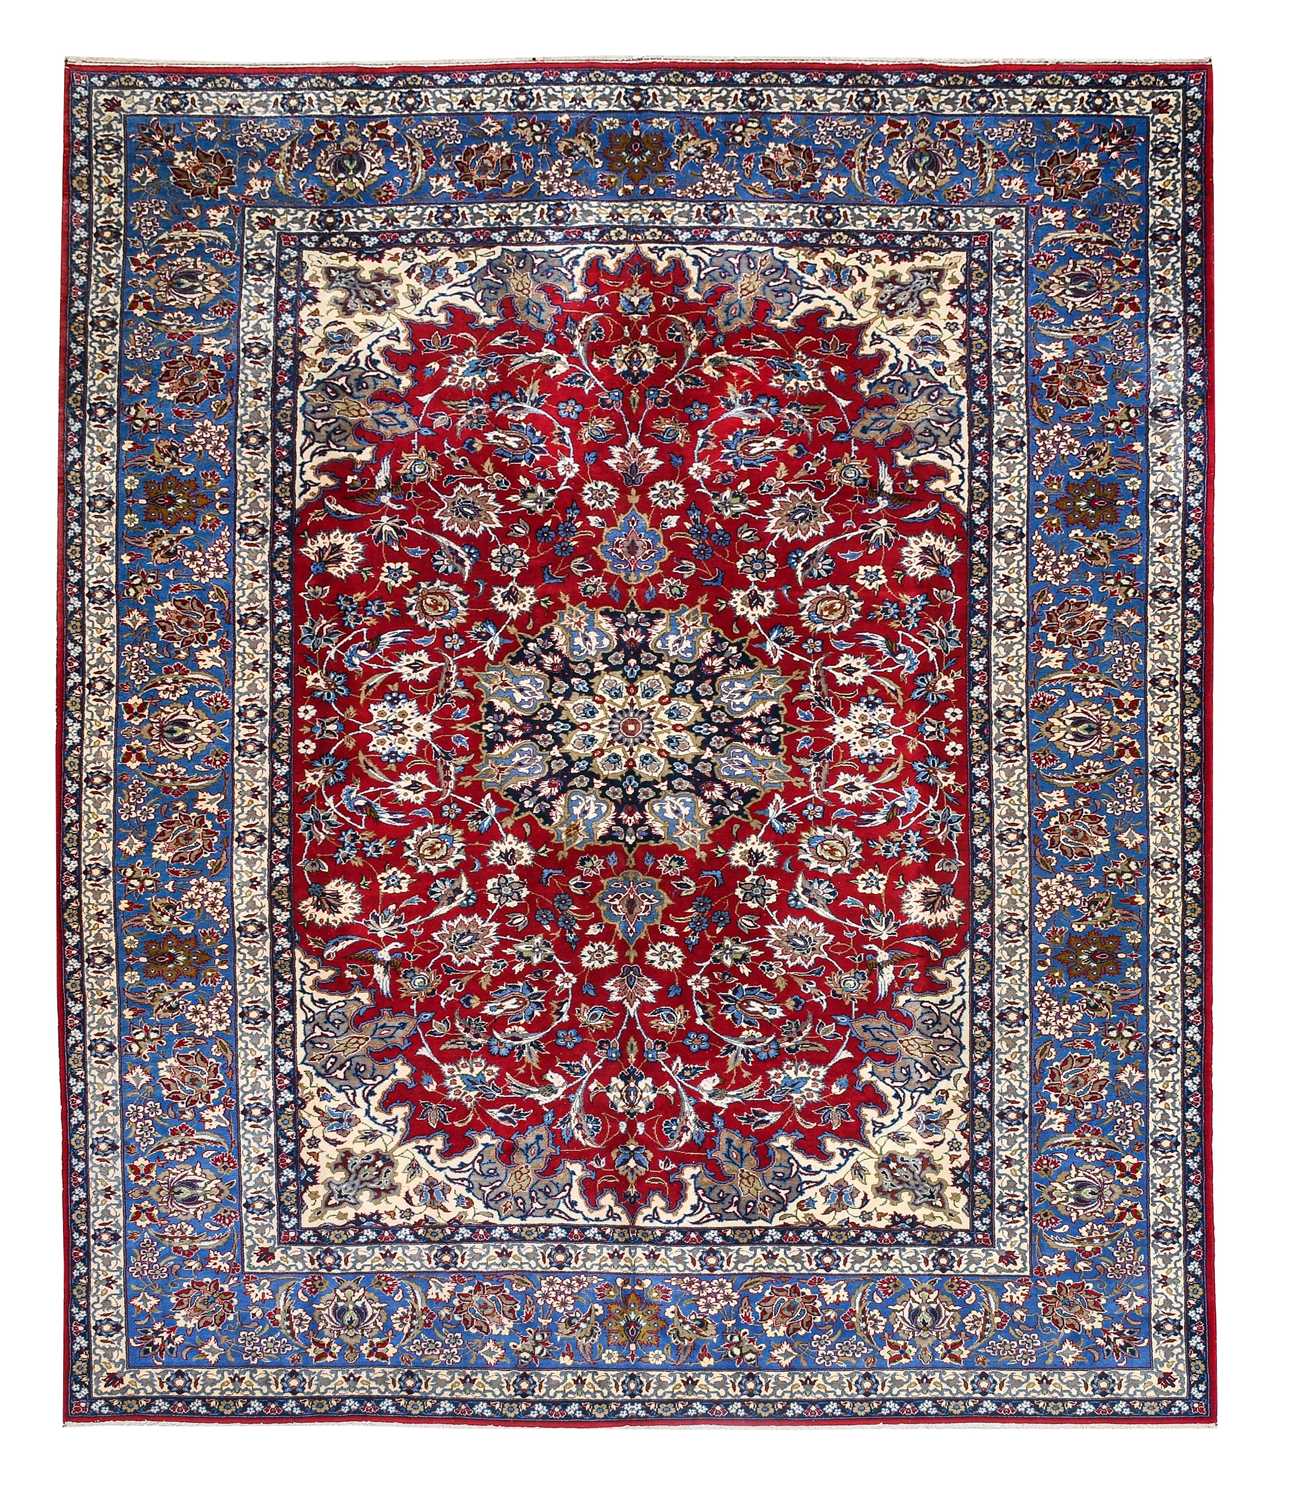 Isfahan Carpet Central Iran, circa 1920 The raspberry field of flowering vines around an indigo